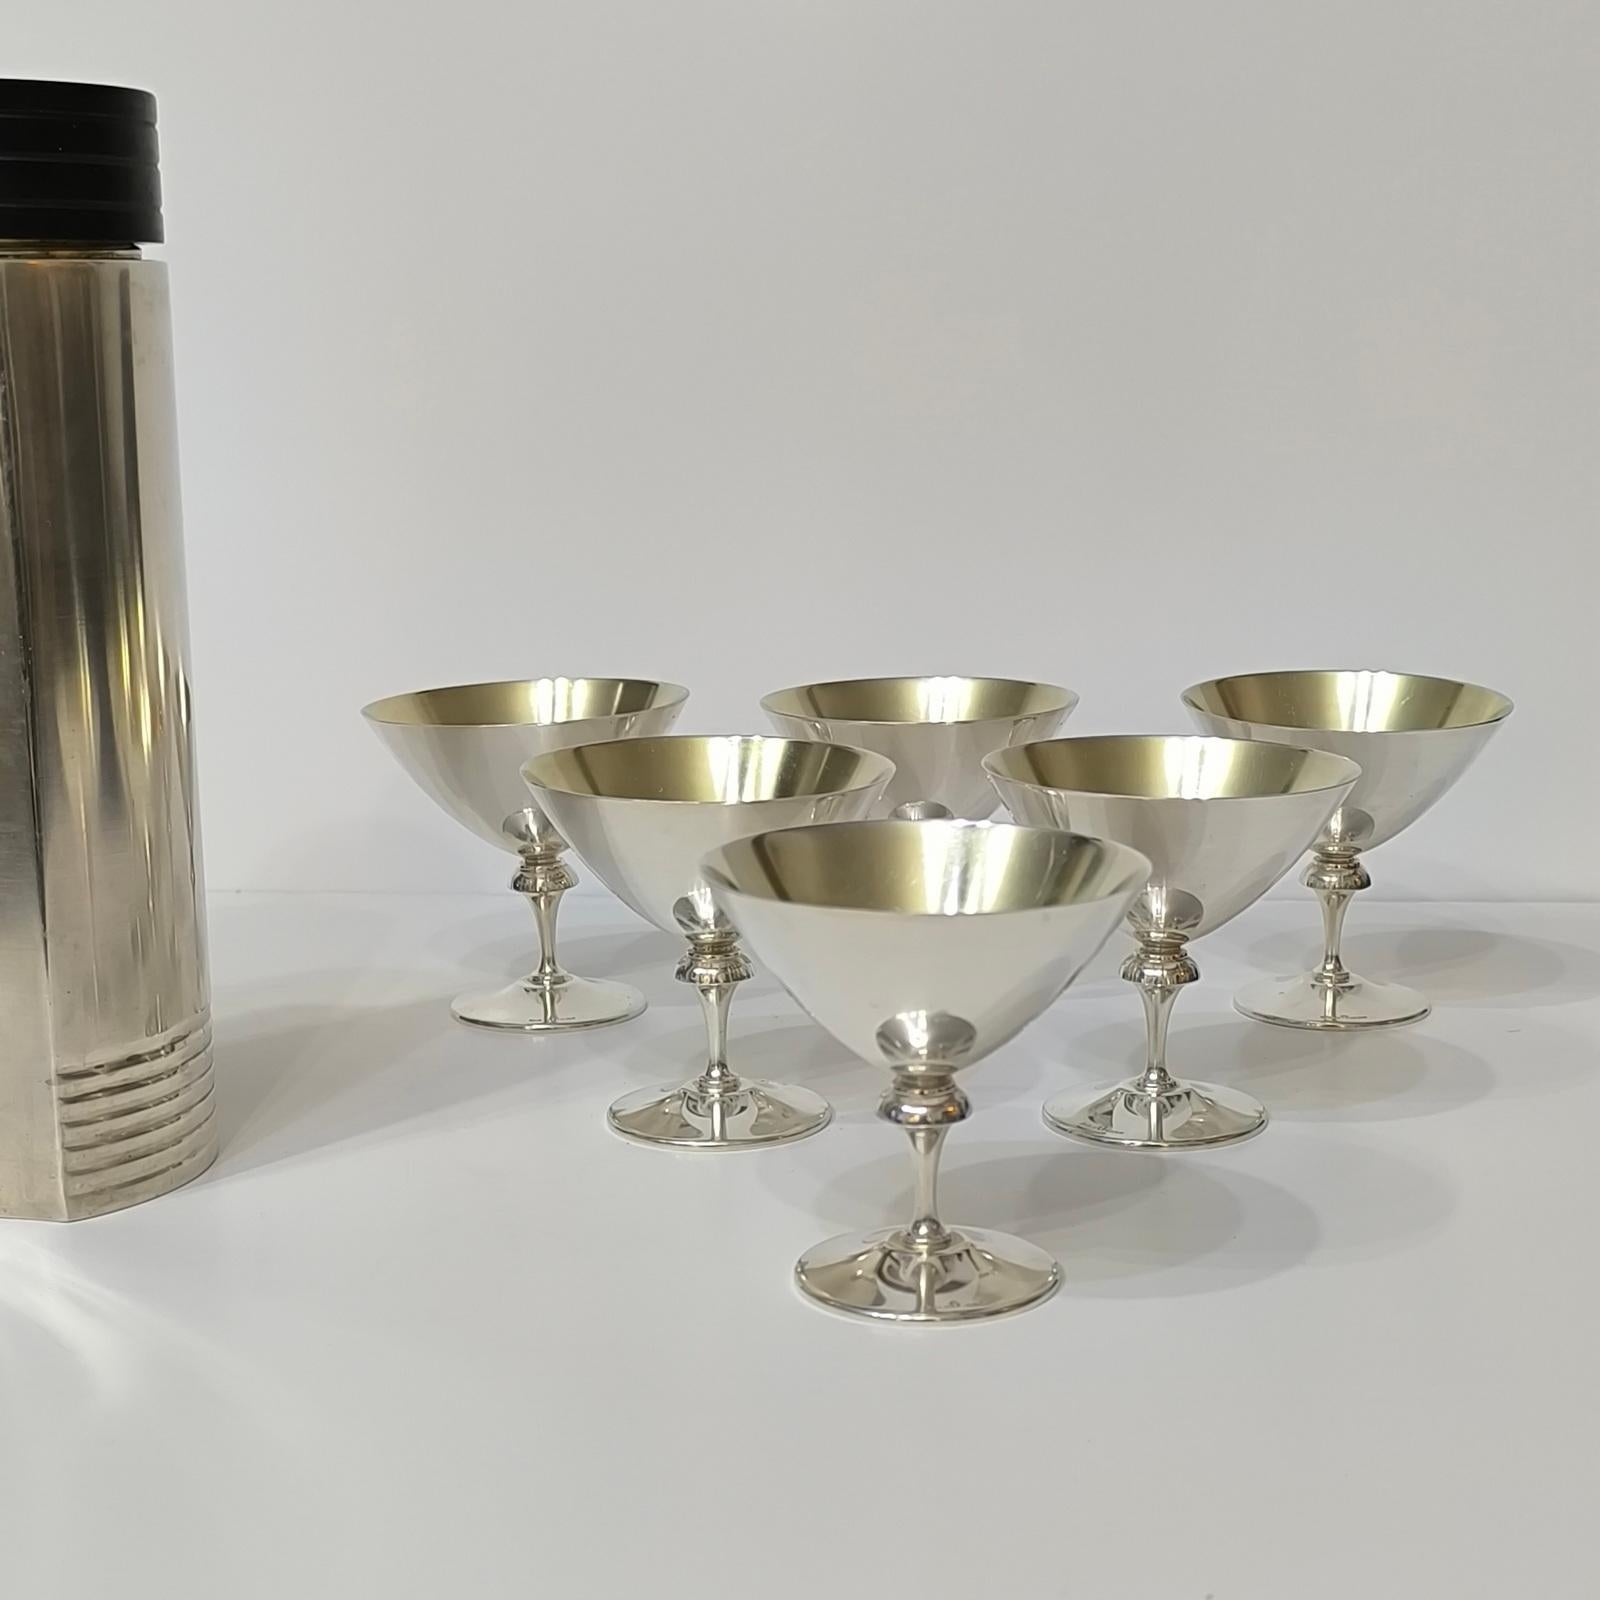 Art Deco Cocktail Shaker with 6 Martini Glasses by Folke Arström, Sweden For Sale 4